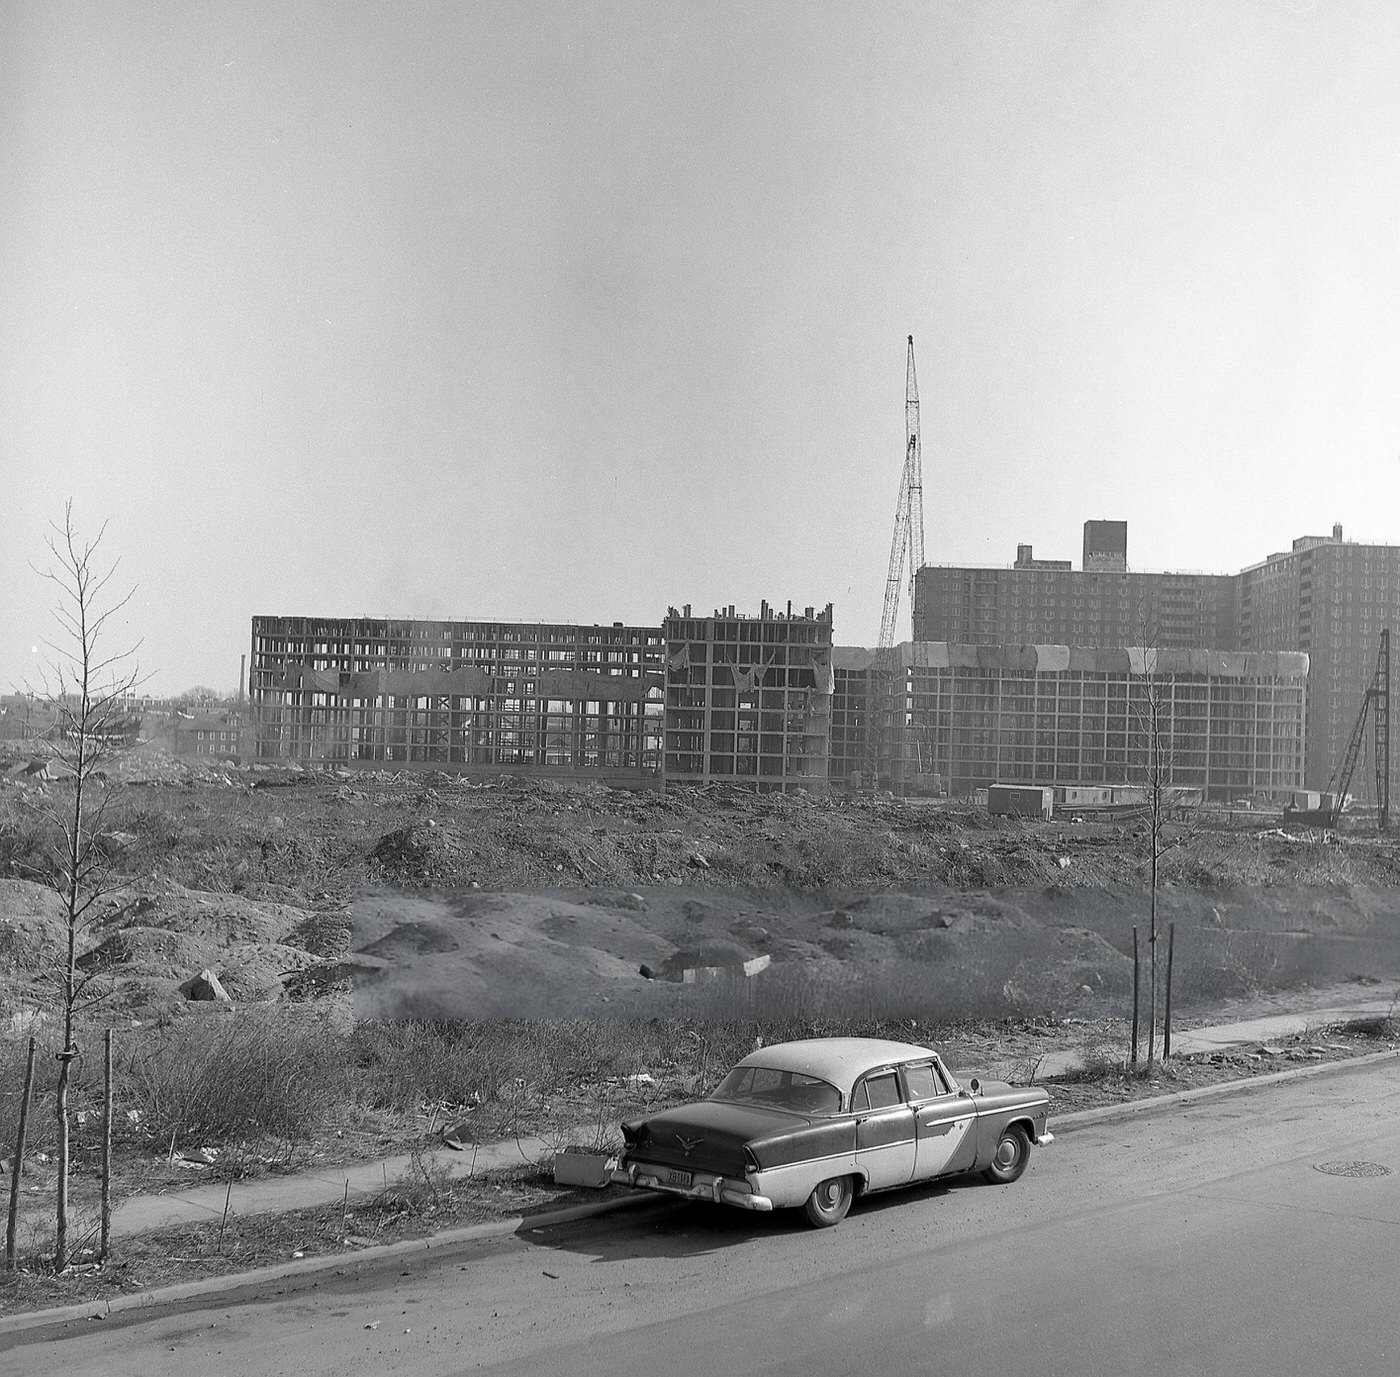 Construction Of The Lefrak City Apartment Complex On The Border Of The Elmhurst-Corona Neighborhood, Queens, 1960S.